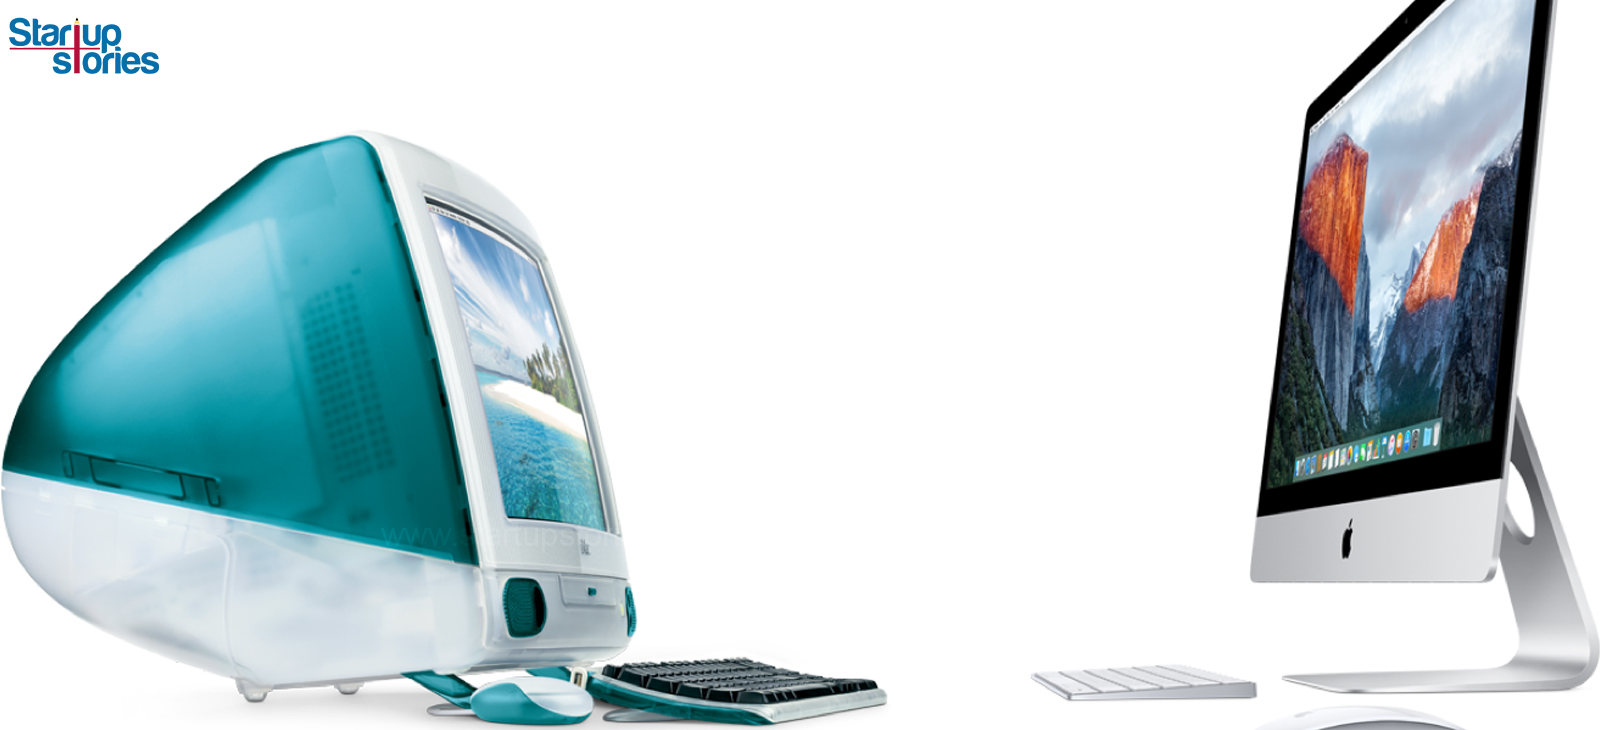 Apple Groundbreaking iMac Turns 20,Startup Stories,Startup News India,Inspiring Startup Story,Apple iMac Turns 20,Apple Iconic iMac Turns 20 Years,Apple Unveils iMac,20 Years of iMac,Apple First Generation iMac Turns 20,Apple CEO Tim Cook,Apple Celebrates 20th Anniversary,Innovations of Steve Jobs